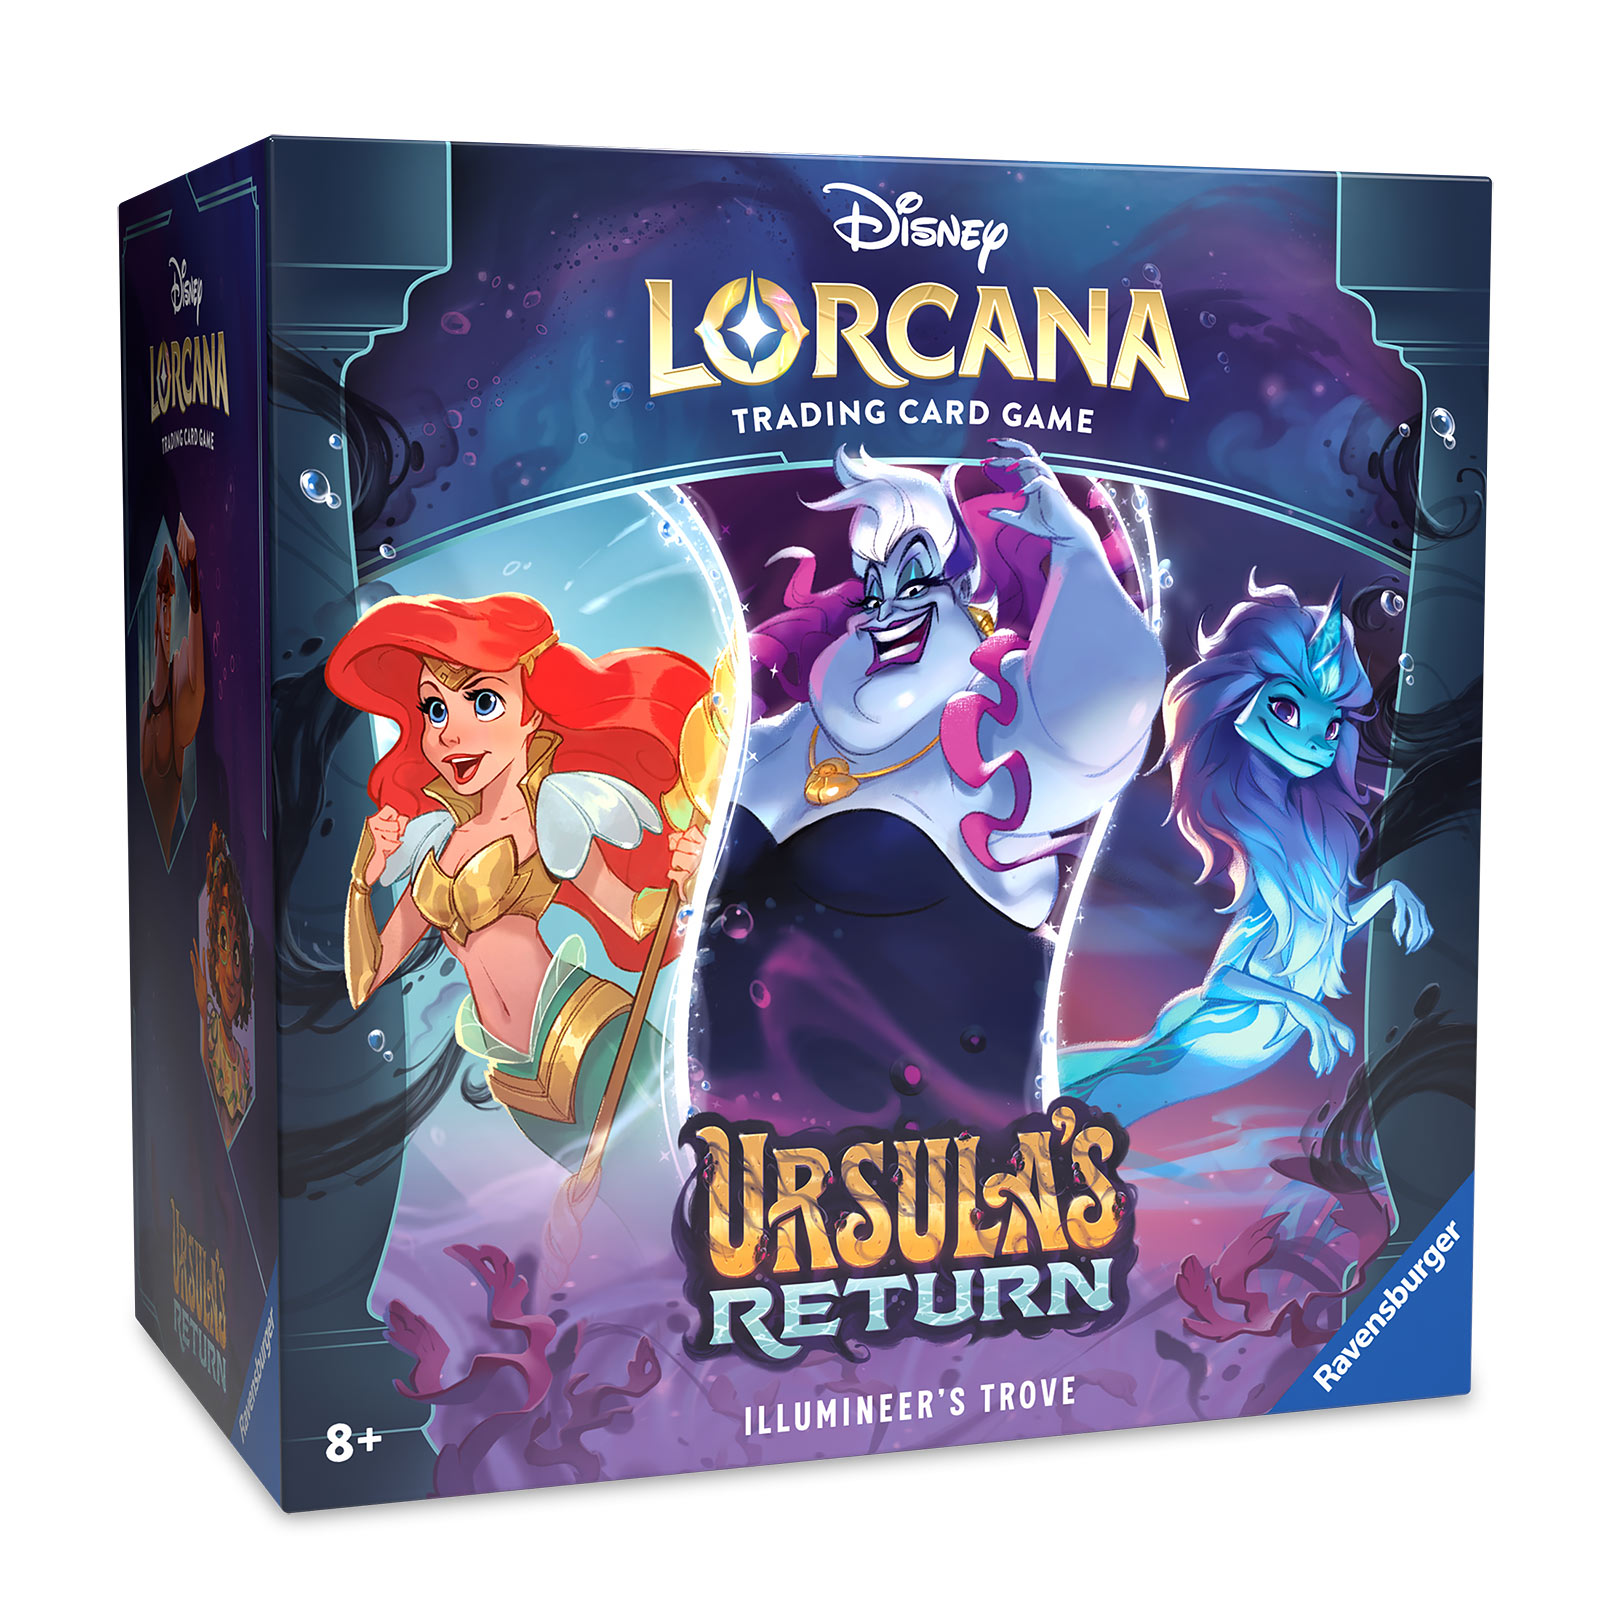 Disney Lorcana Illumineer's Trove - Ursula's Return Trading Card Game